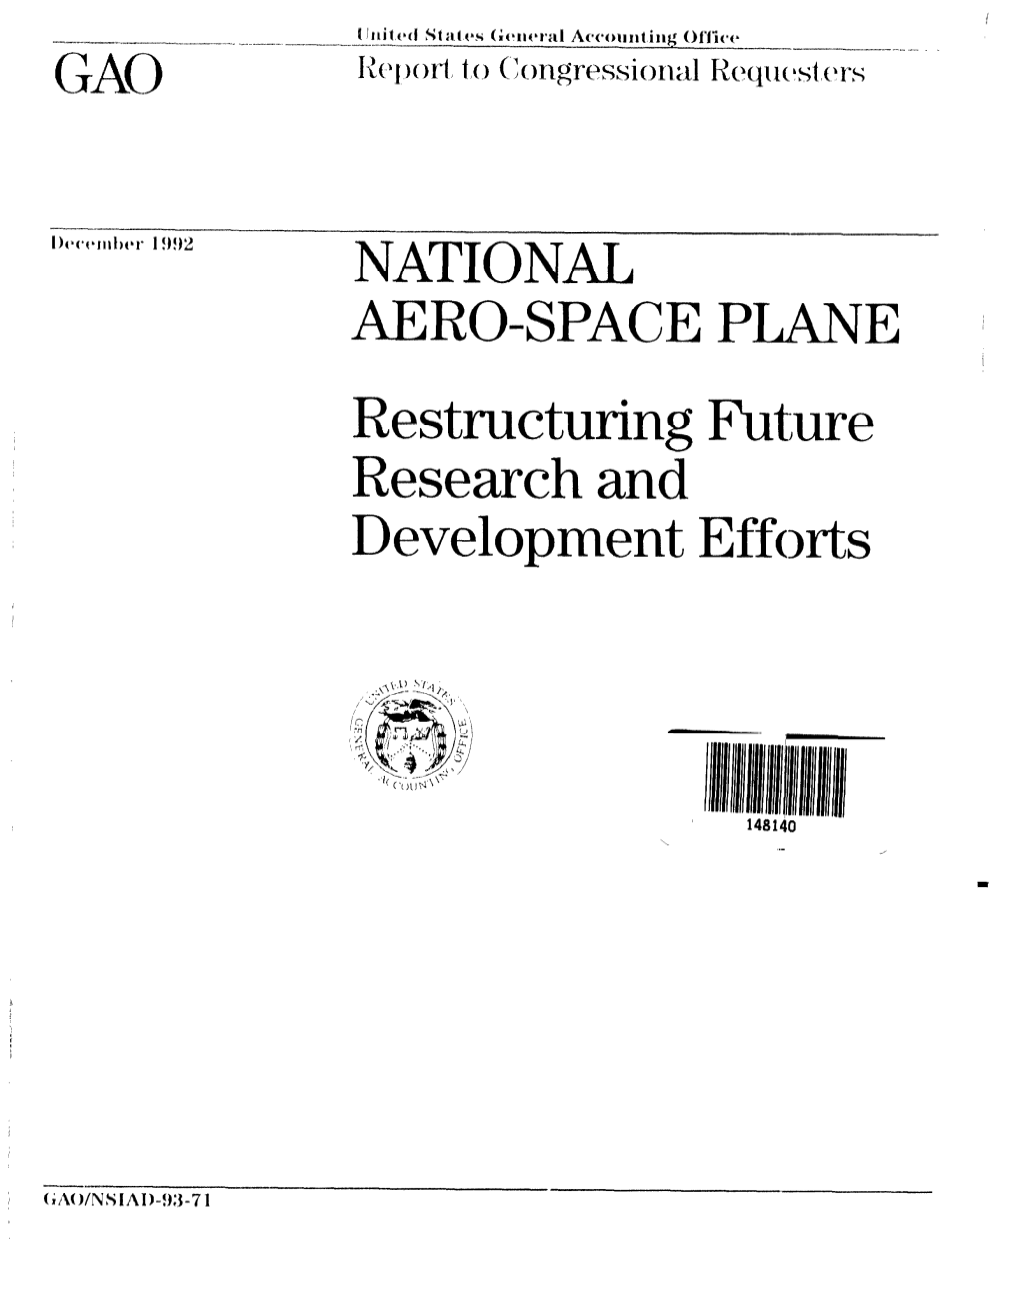 NSIAD-93-71 National Aero-Space Plane Executive Summary